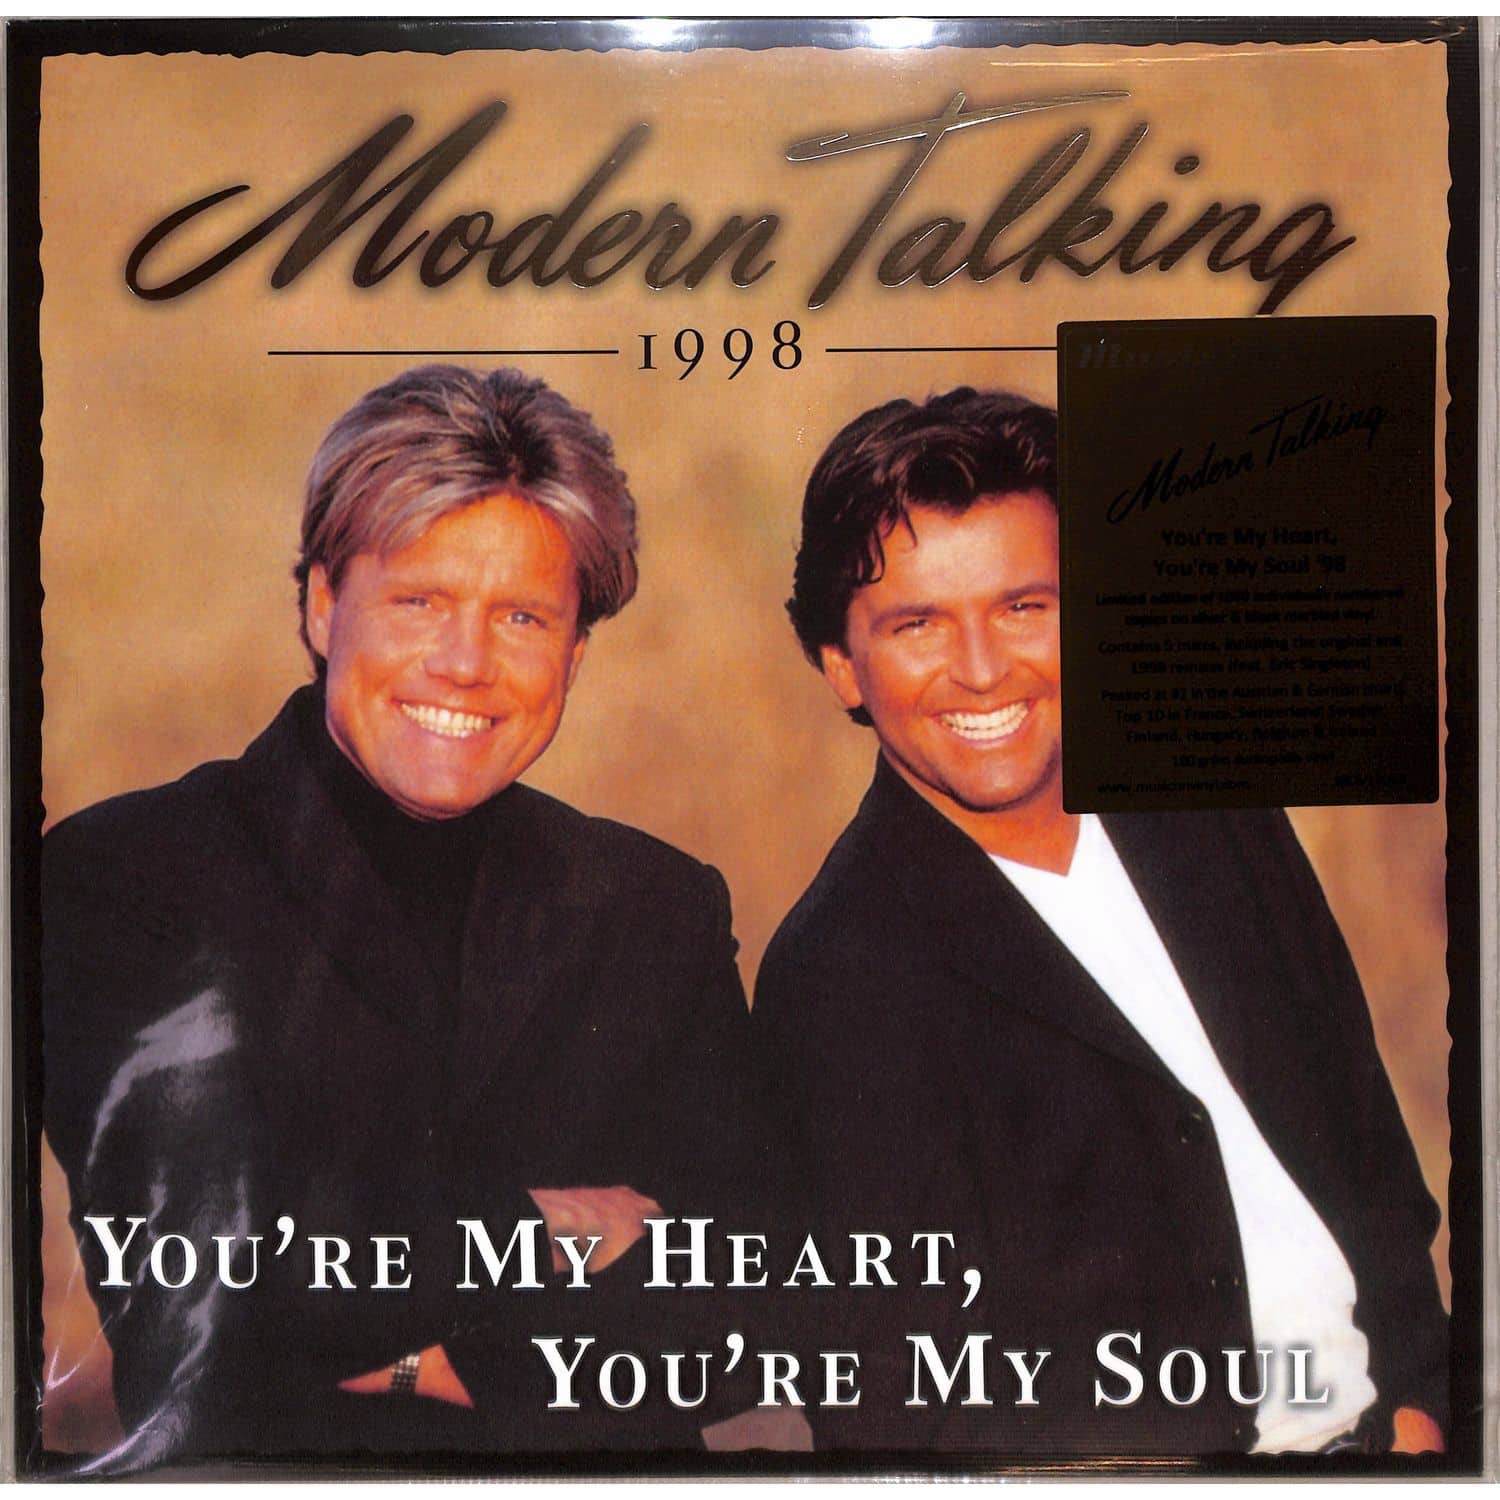 Modern Talking - YOU RE MY HEART, YOU RE MY SOUL 98 